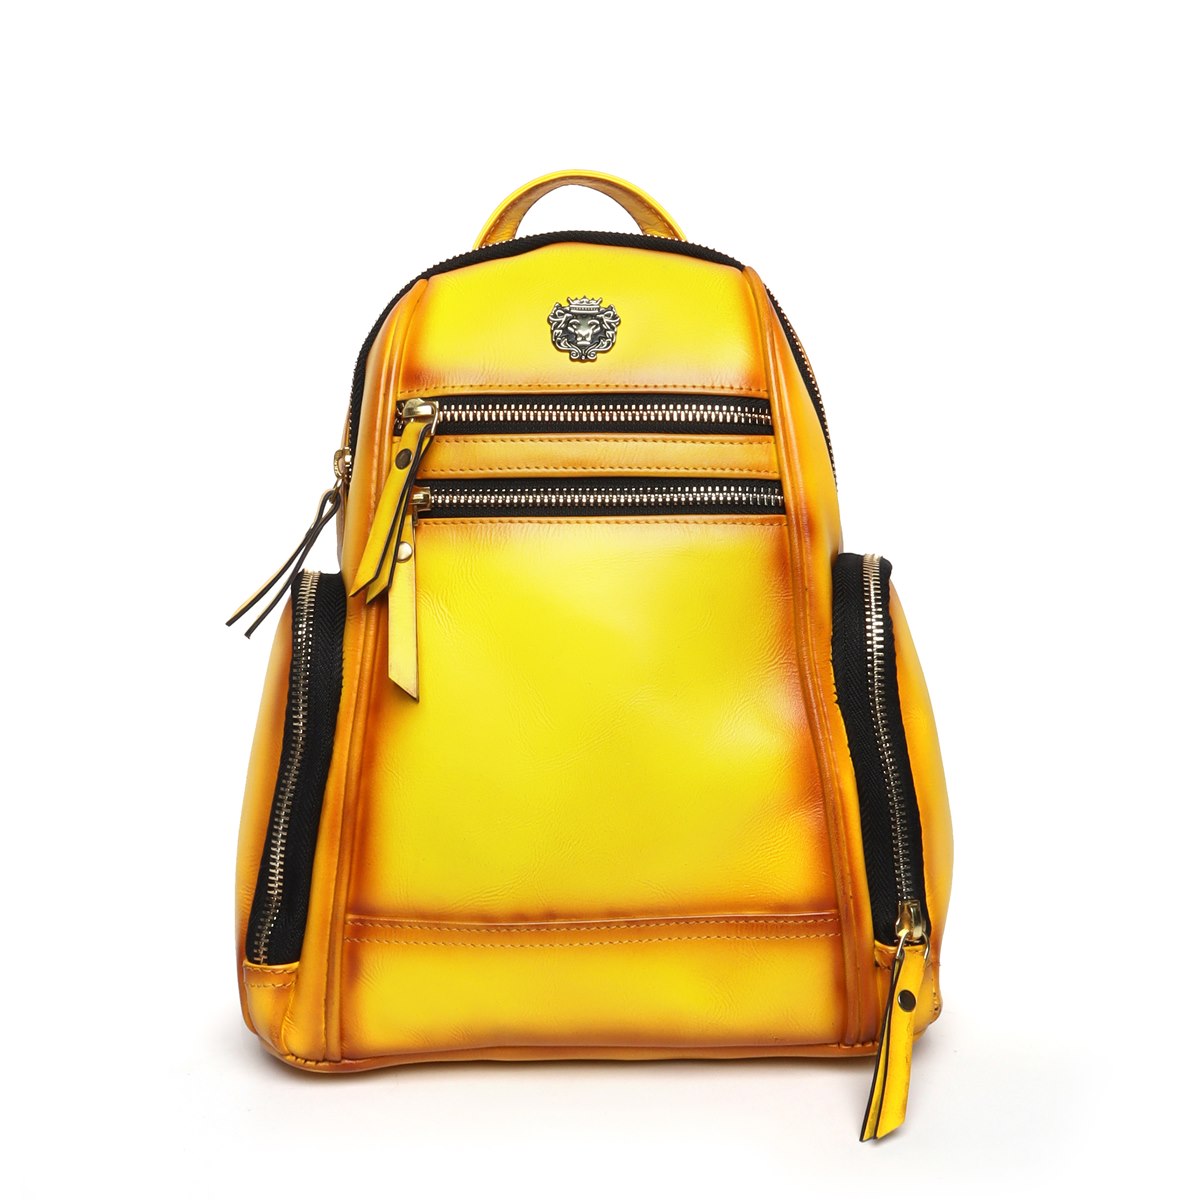 Allen Solly Backpacks 18 L Backpack Yellow - Price in India | Flipkart.com